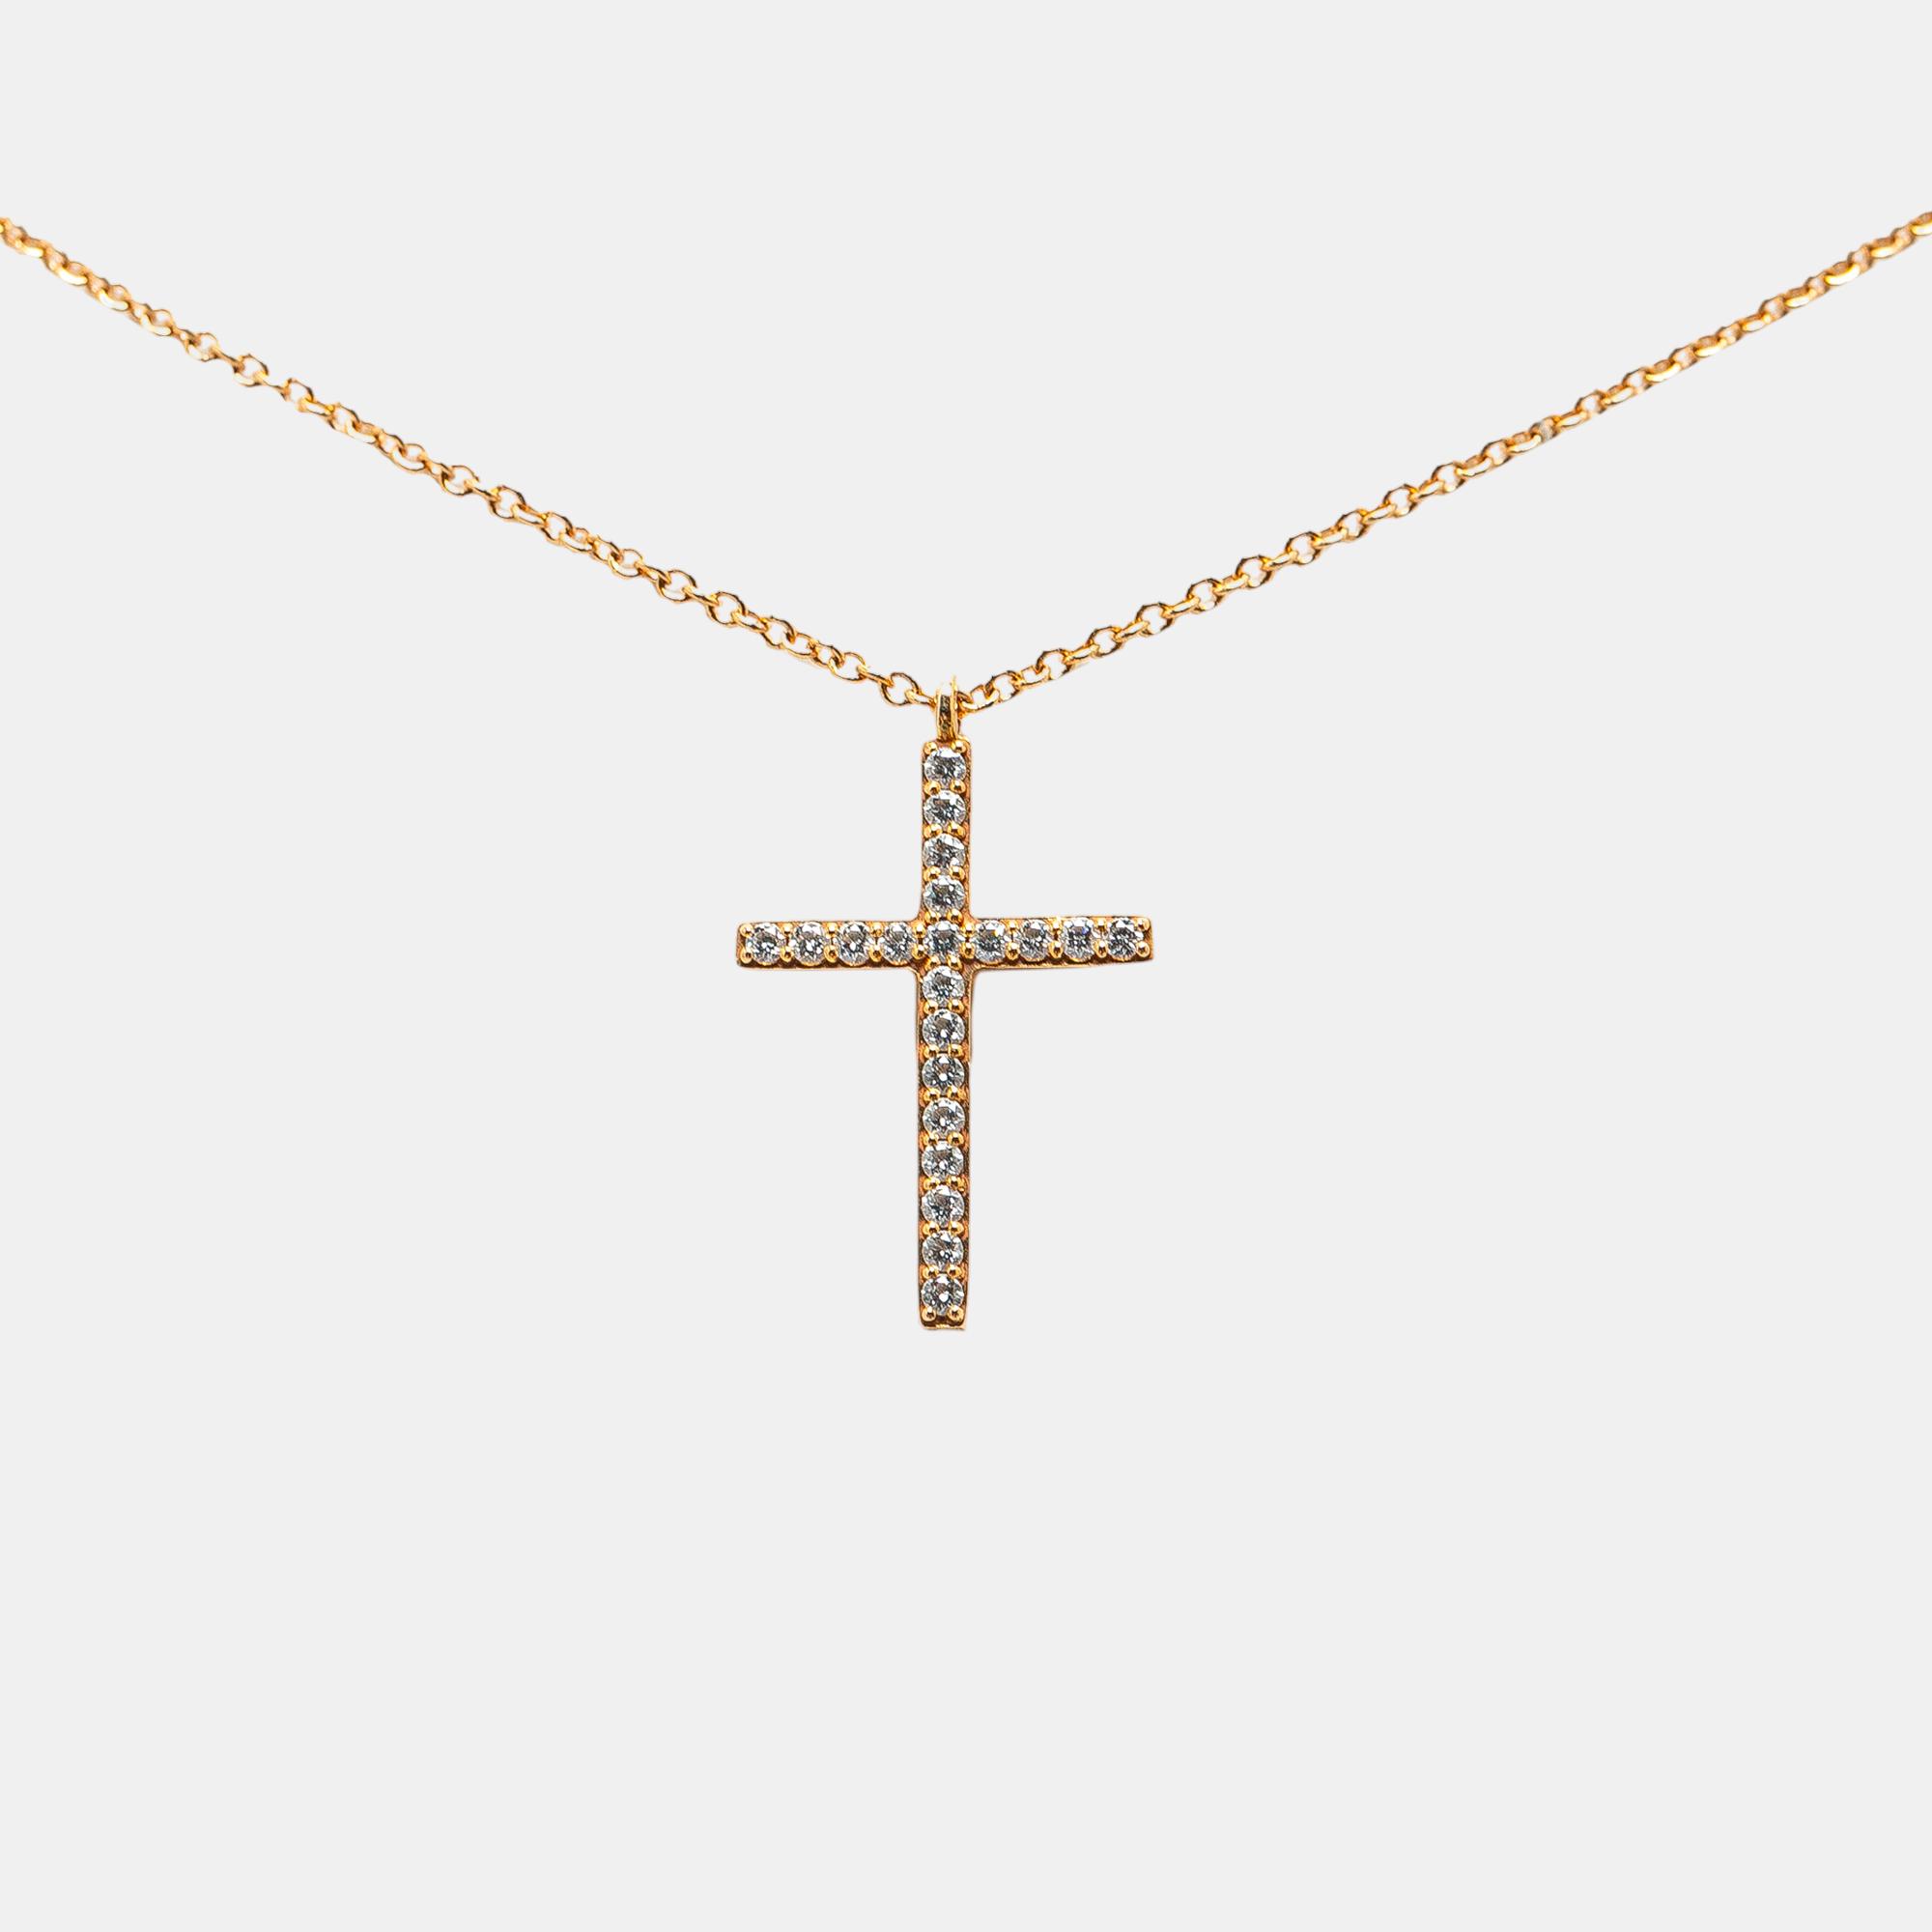 Tiffany & co. 18k yellow gold diamond medium metro cross pendant necklace